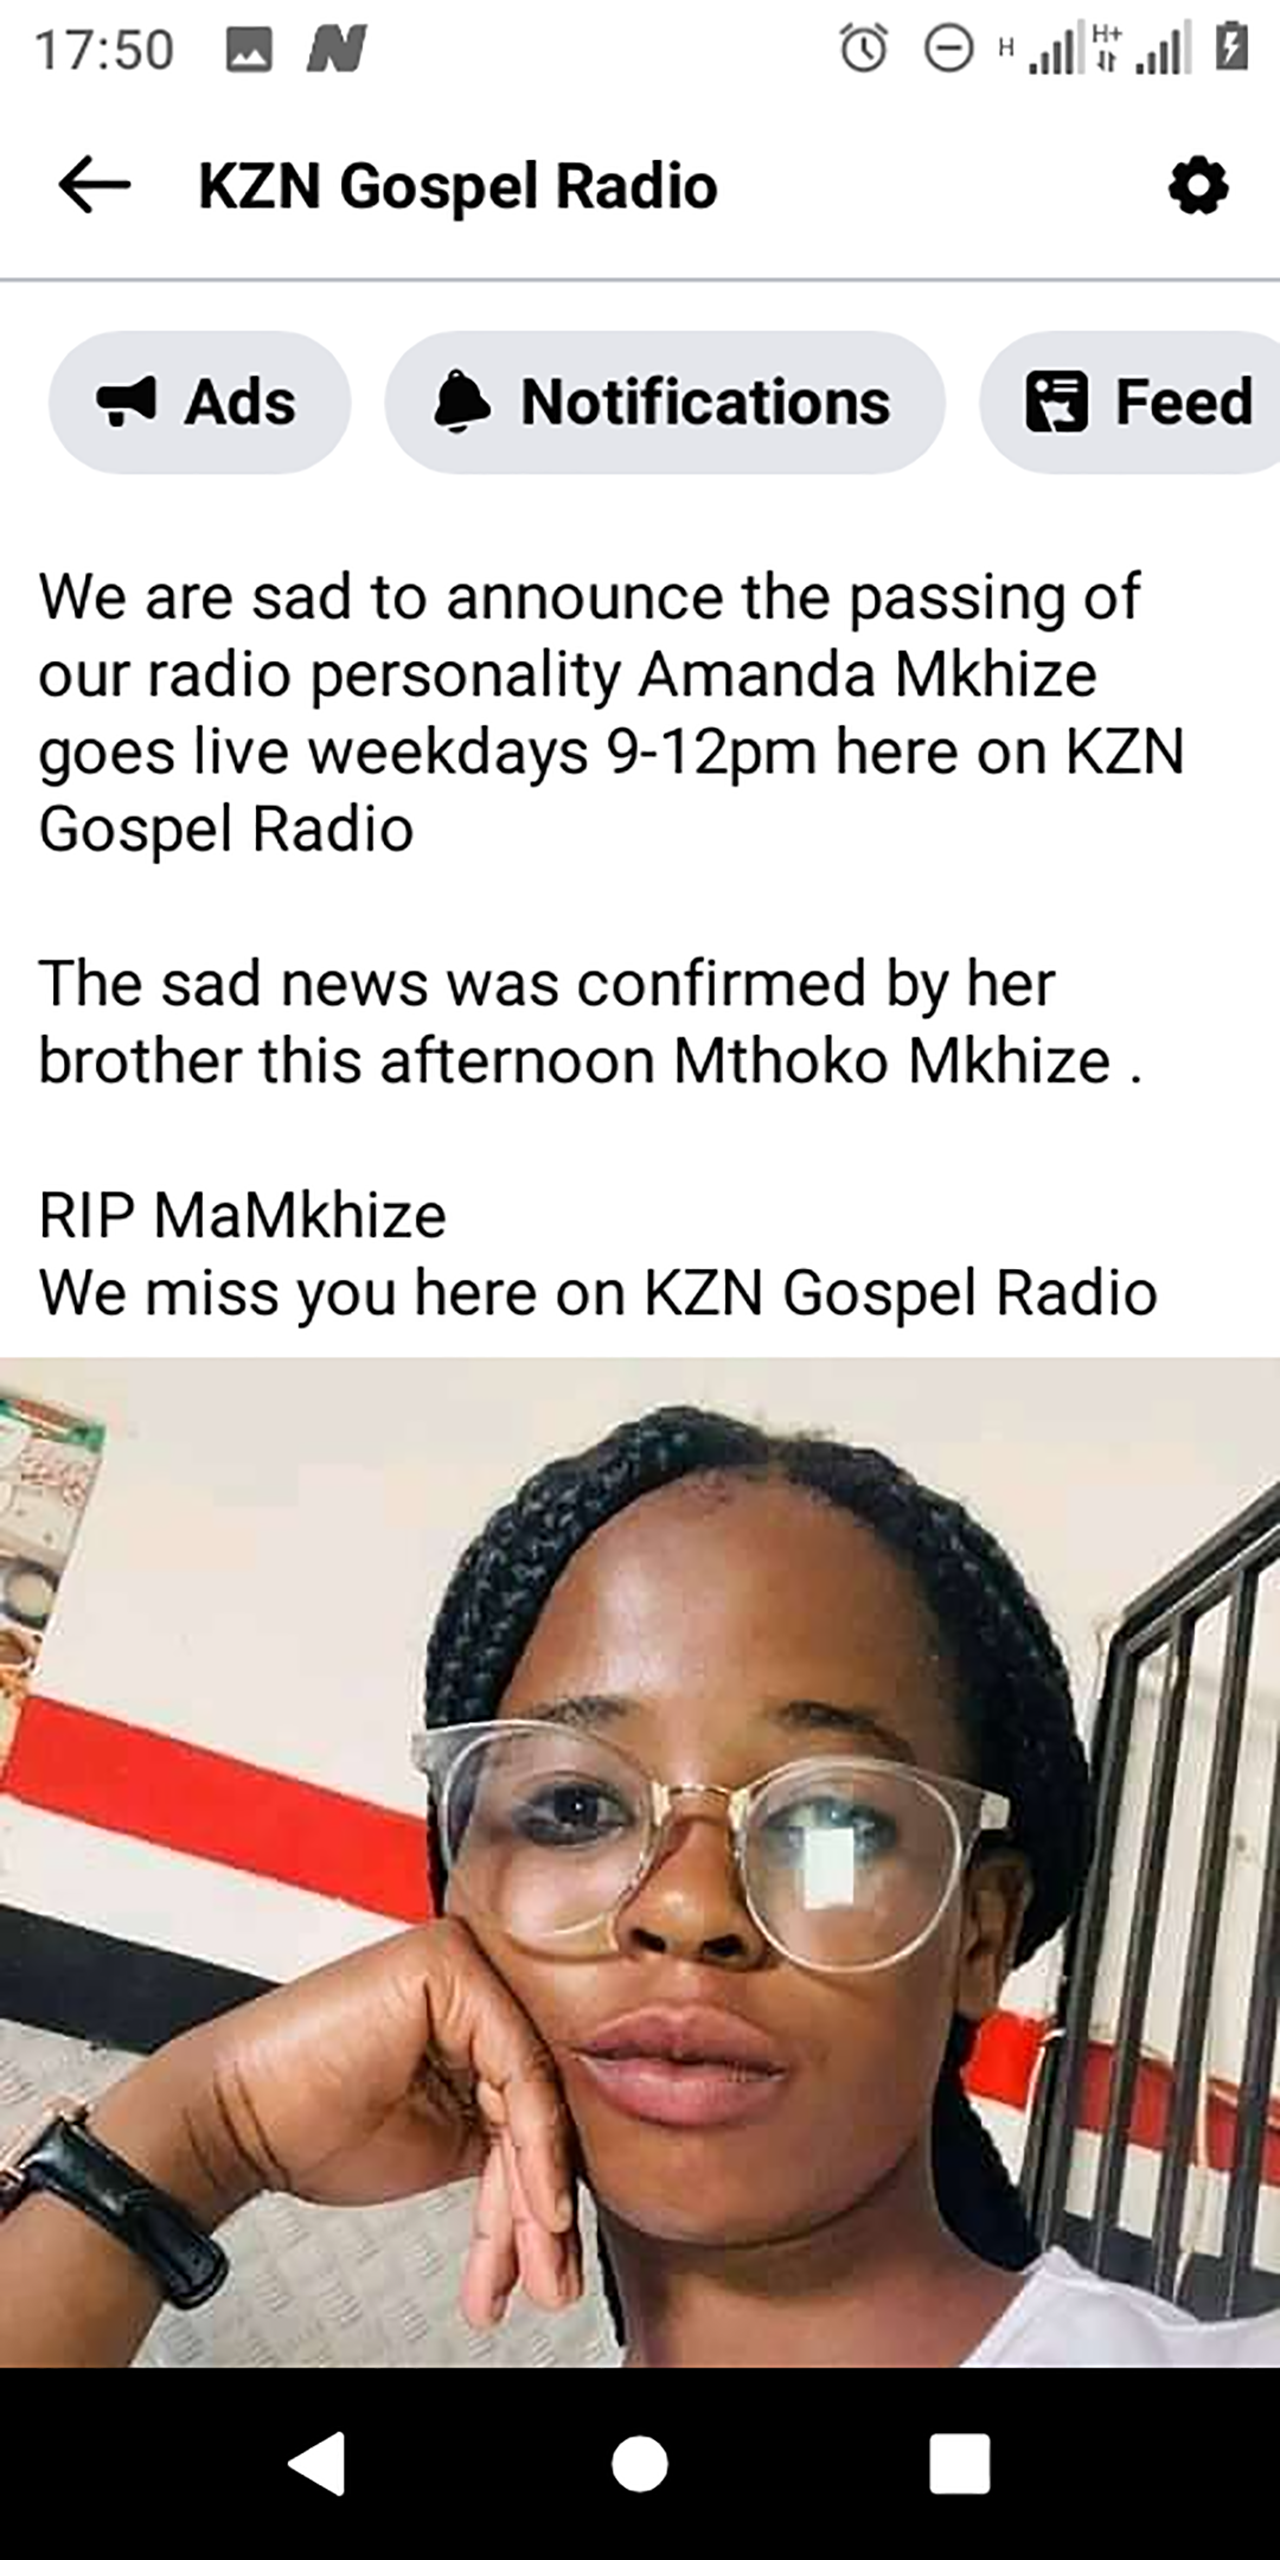 Shocking News: MaMkhize Passed Away 2